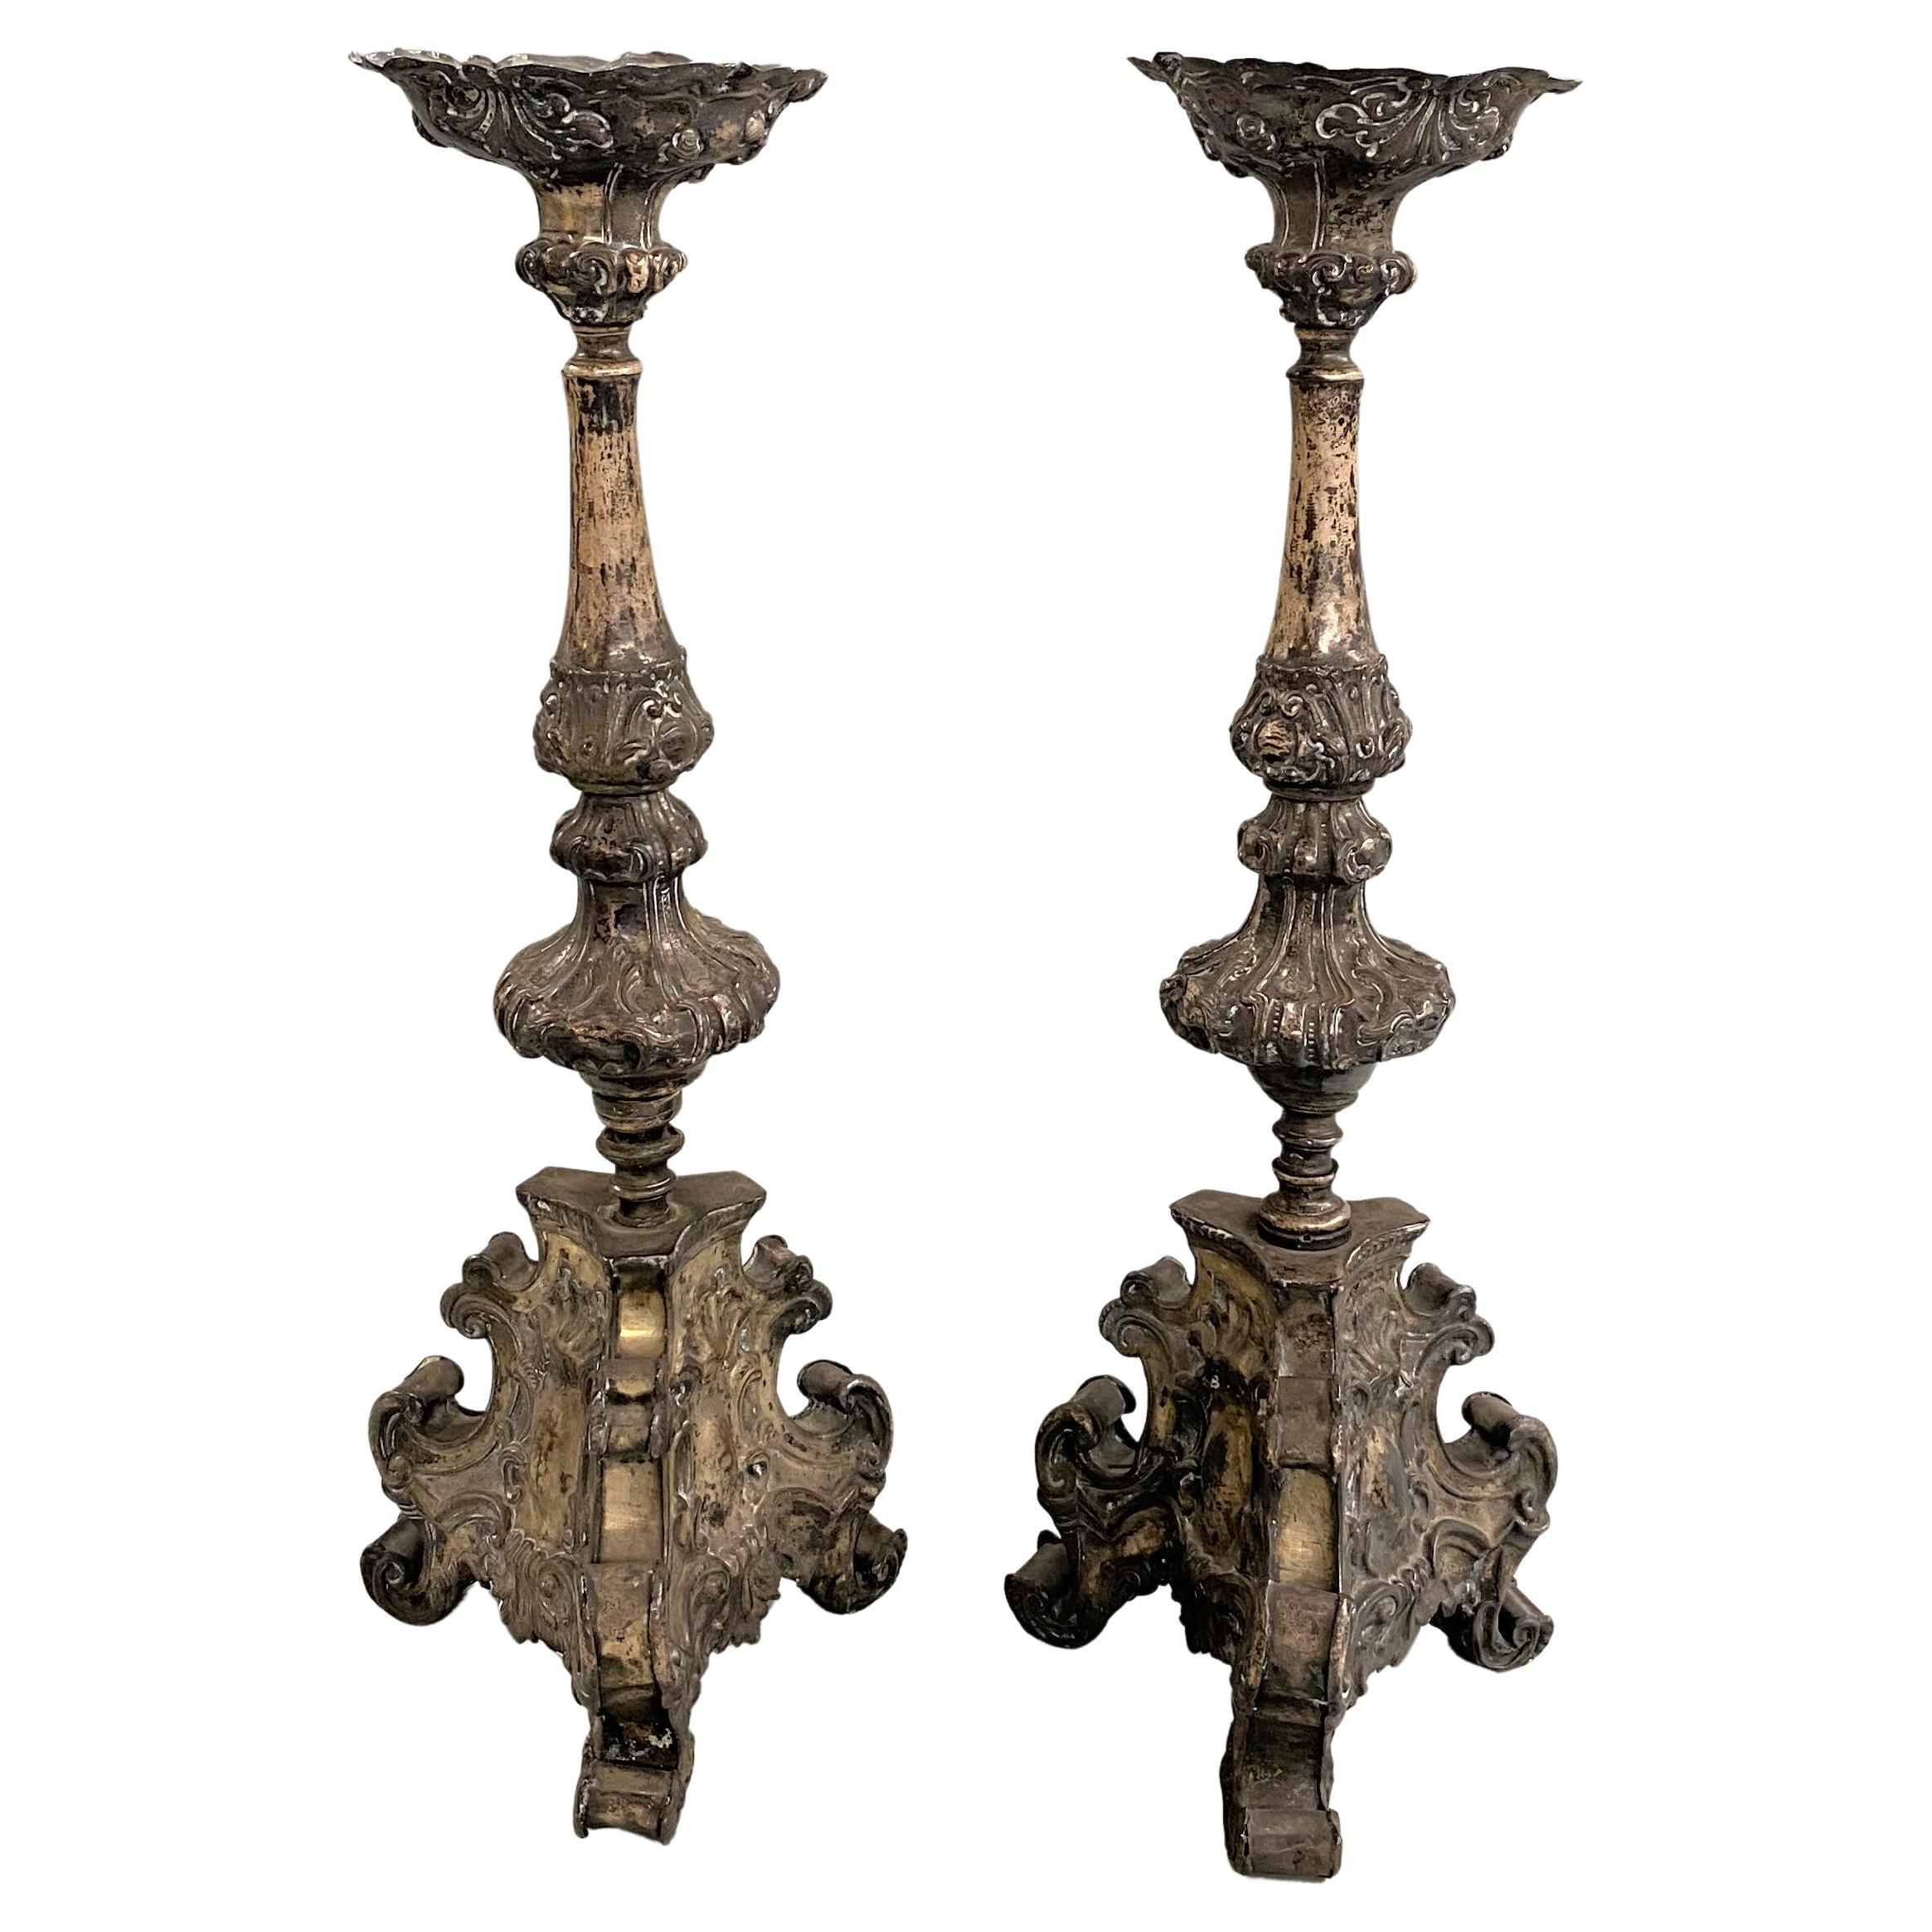 Pair of 18th Century Italian Baroque Style Pressed Metal Candlesticks